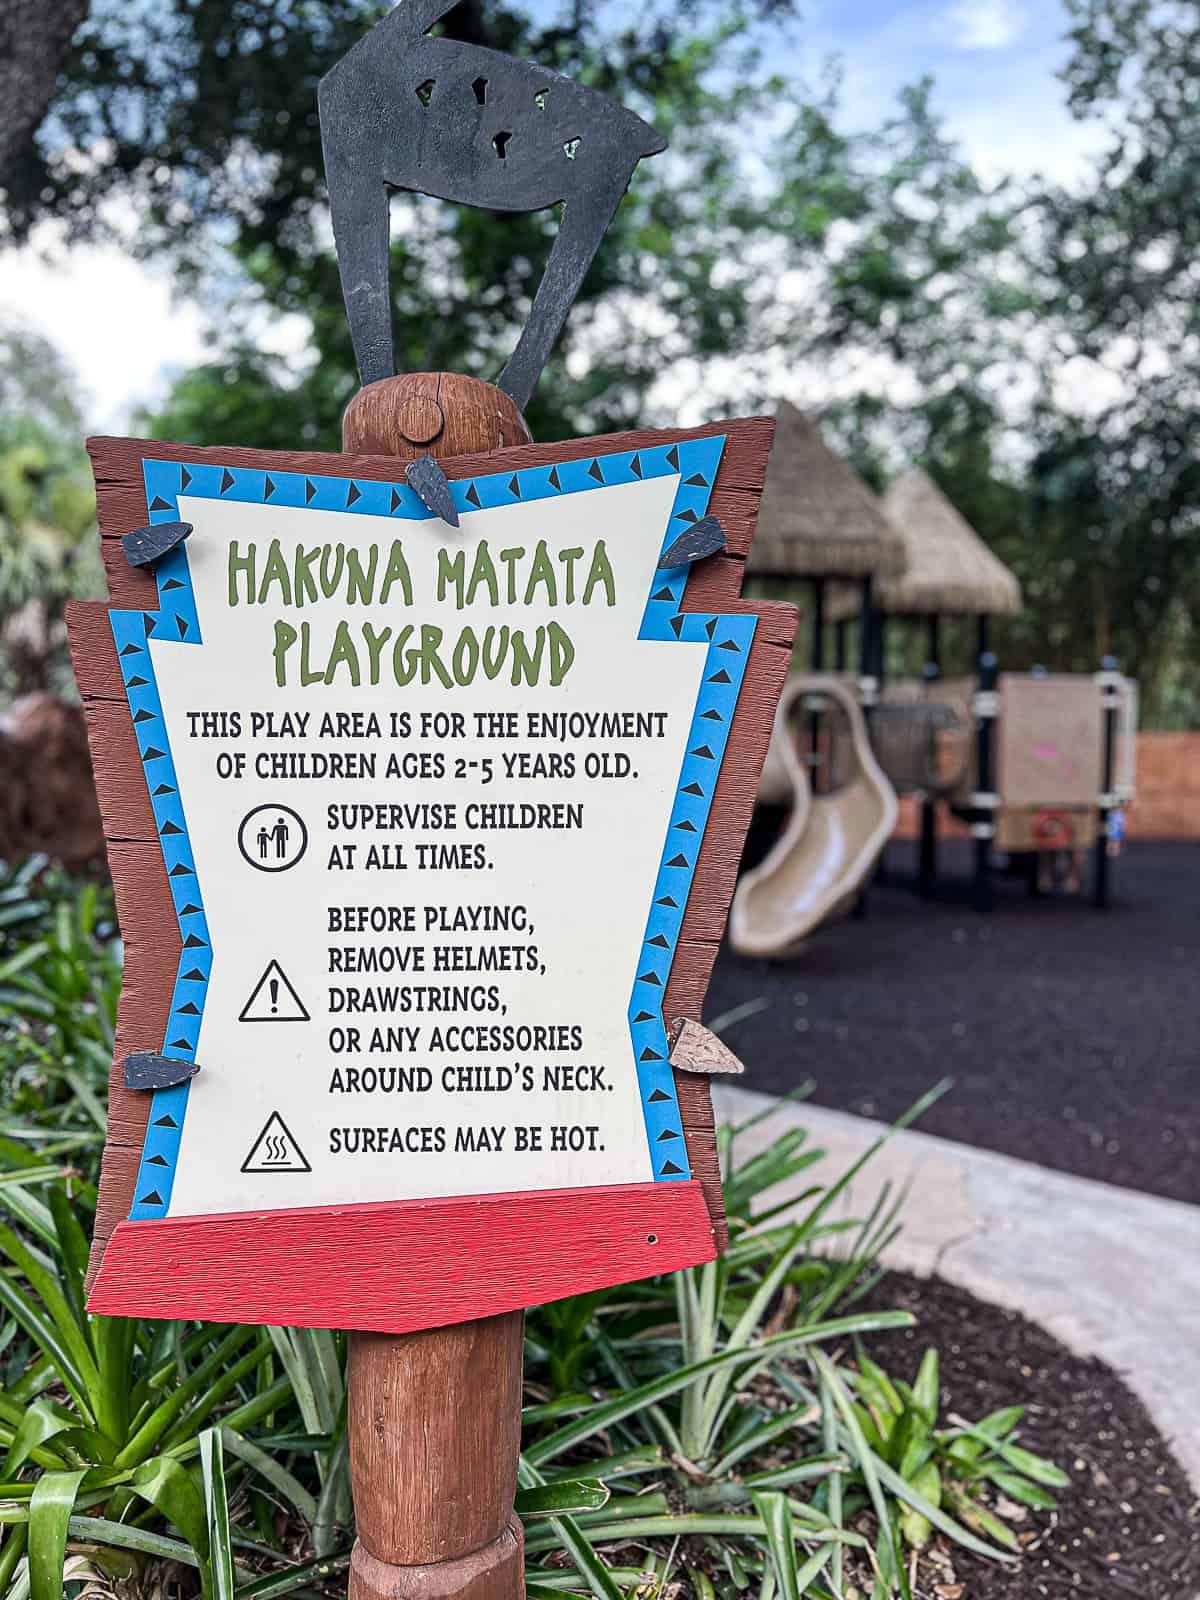 Animal Kingdom Lodge Walt Disney World Hakuna Matata Playground Sign with ages listed